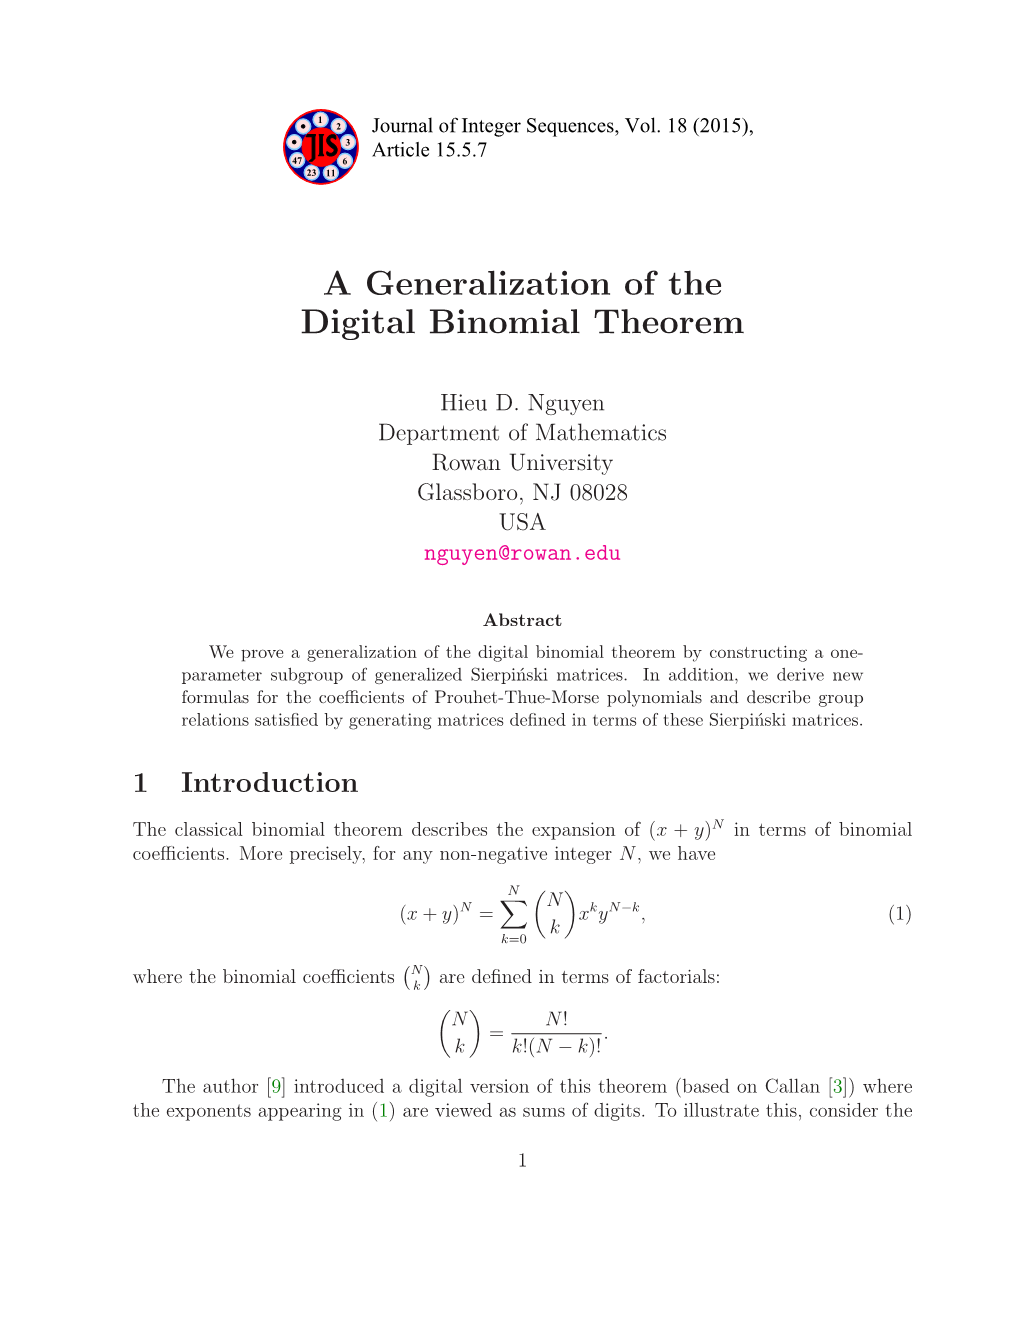 A Generalization of the Digital Binomial Theorem